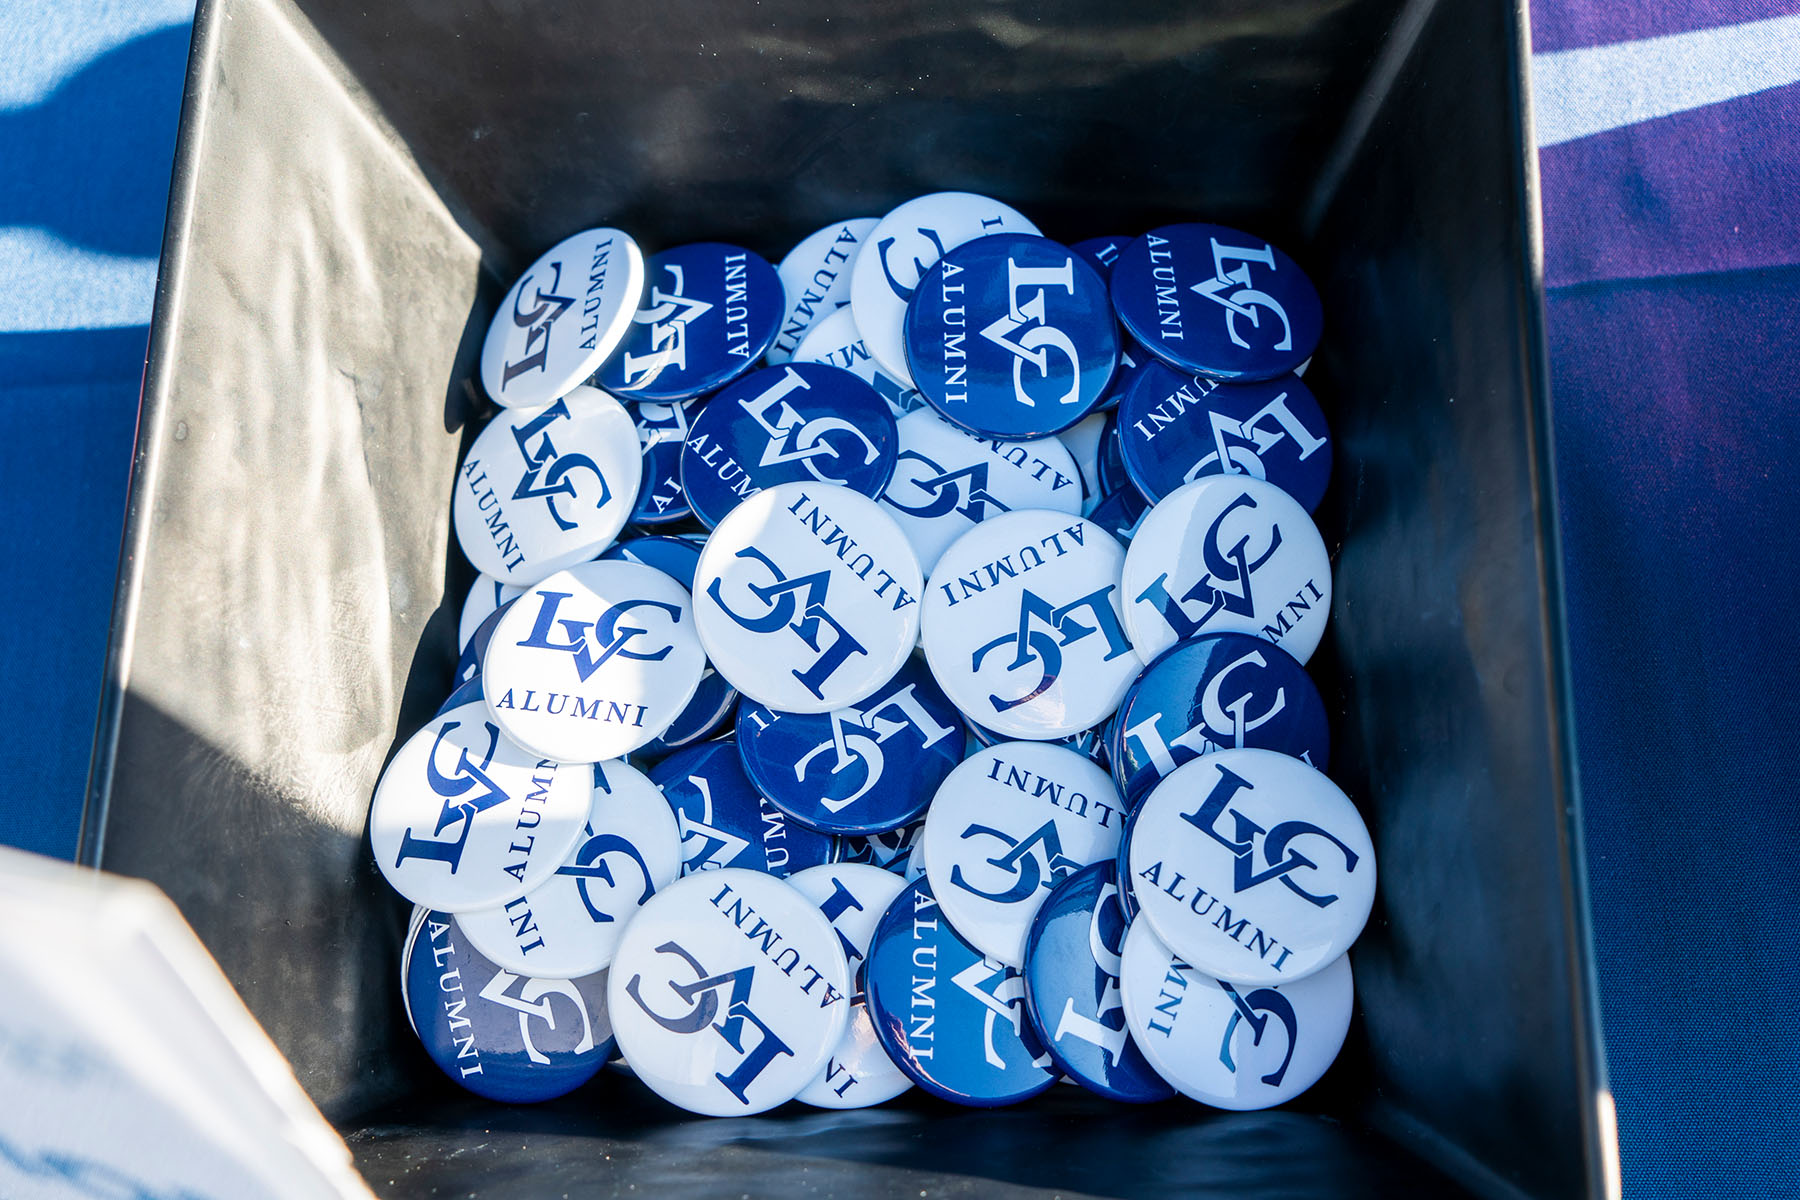 Pile of pins that read "LVC Alumni"